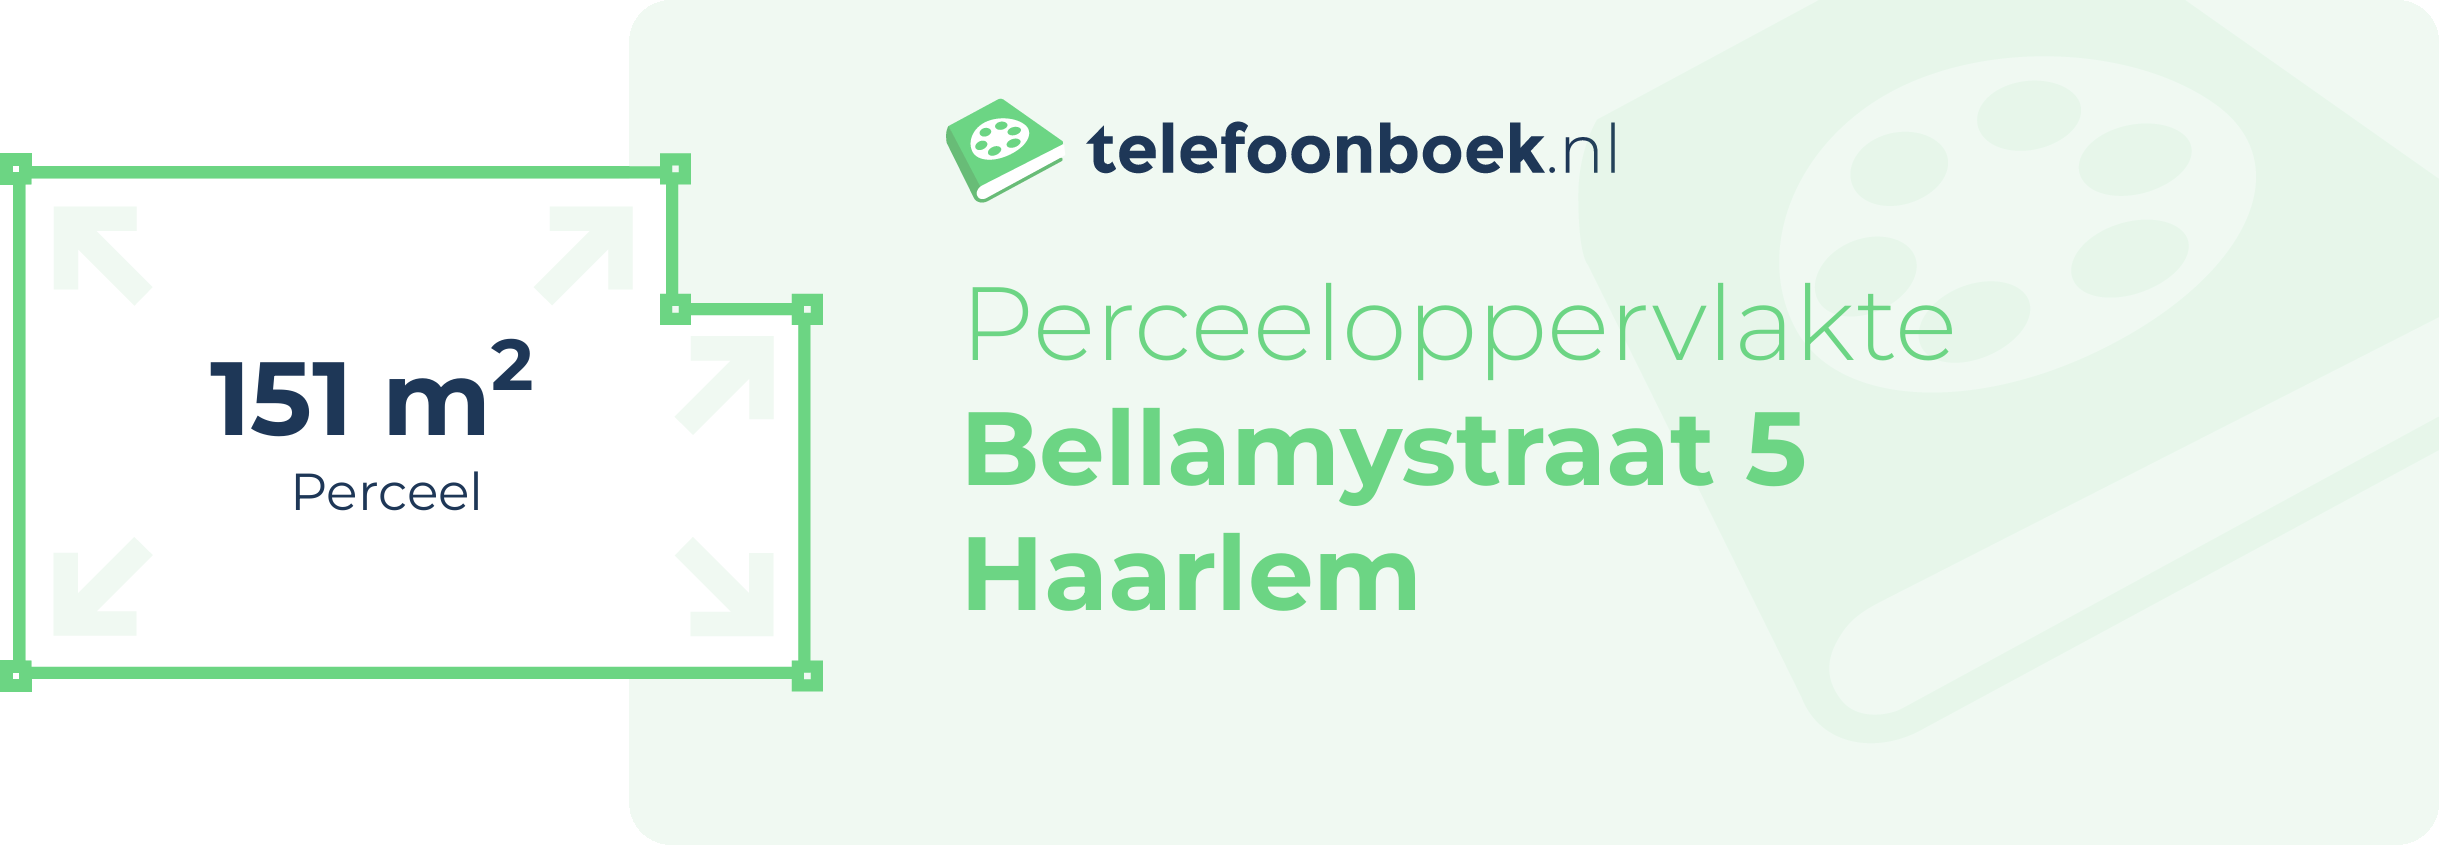 Perceeloppervlakte Bellamystraat 5 Haarlem